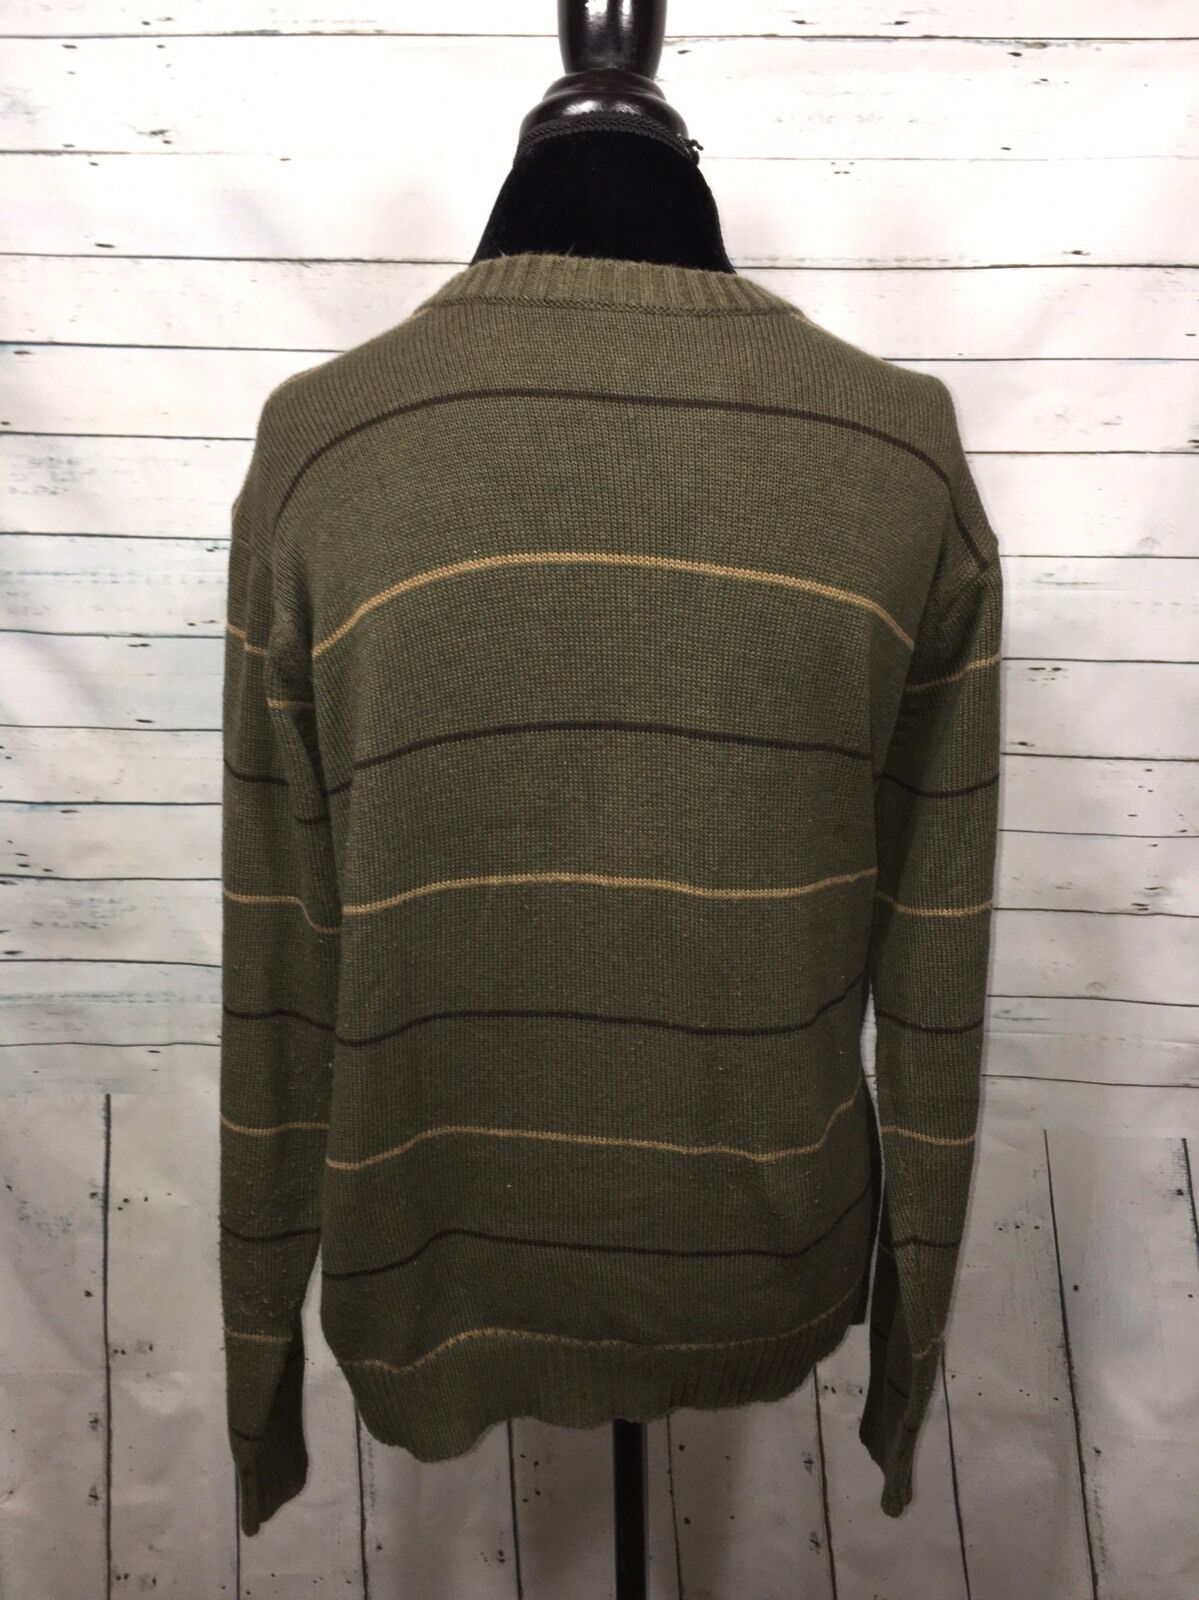 Oscar De La Renta Men\'s Striped sweater cotton blend M green medium